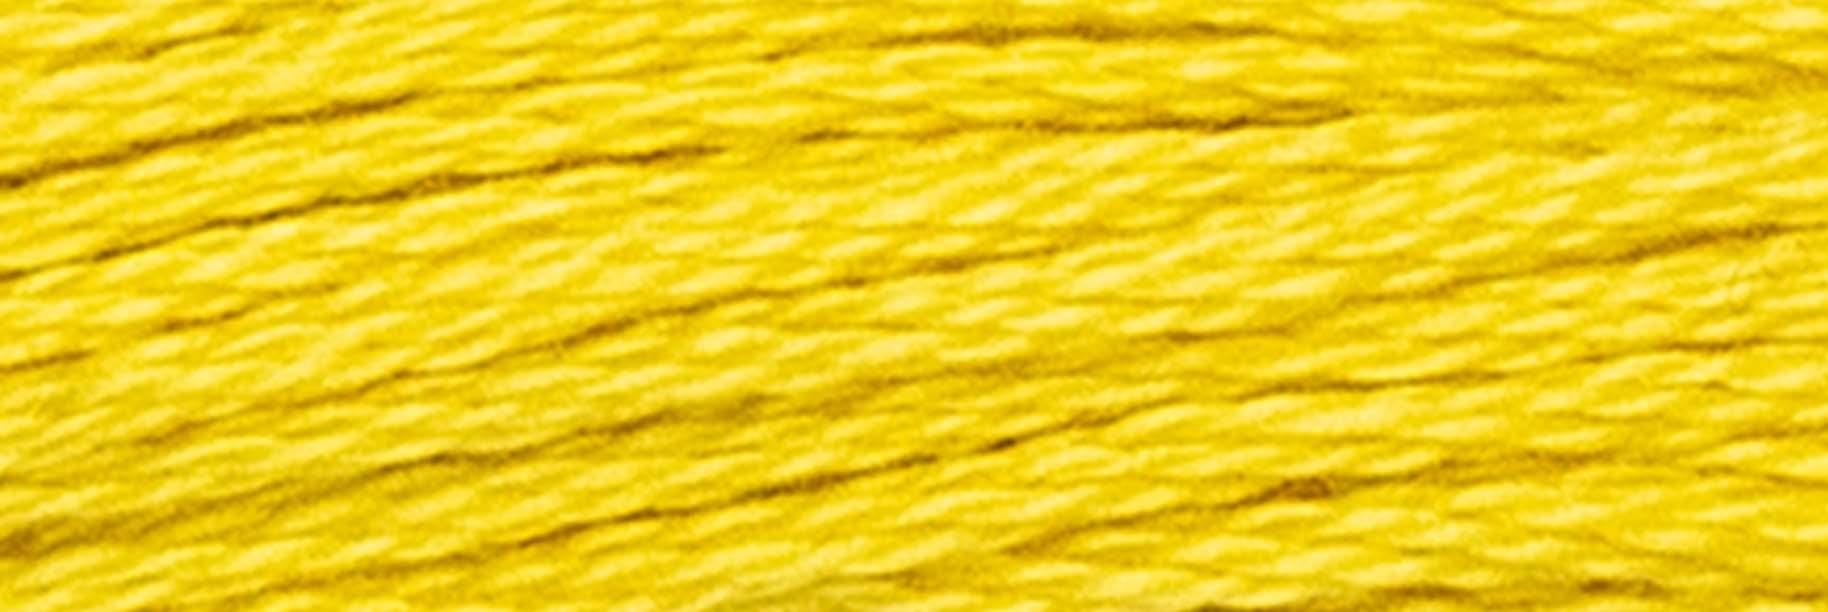 Stranded Cotton Luca-S - 322 / DMC 18 / Anchor 874 - Luca-S Stranded Cotton